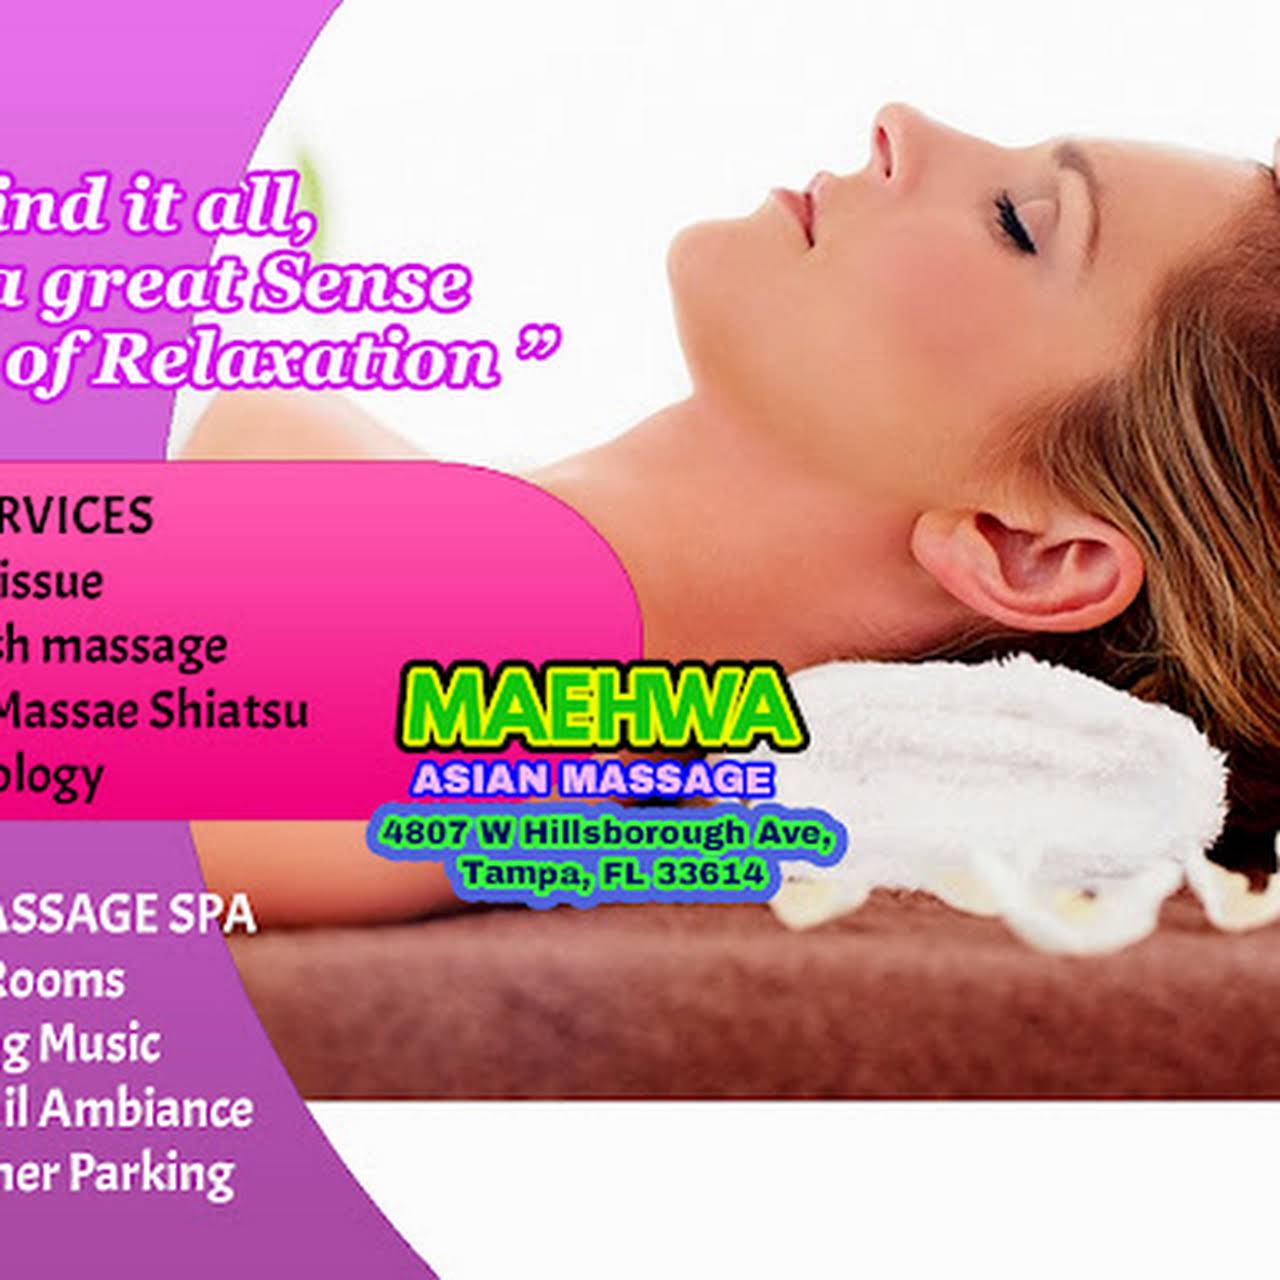 Maehwa Asian Massage Tampa Fl Massage Spa In Tampa